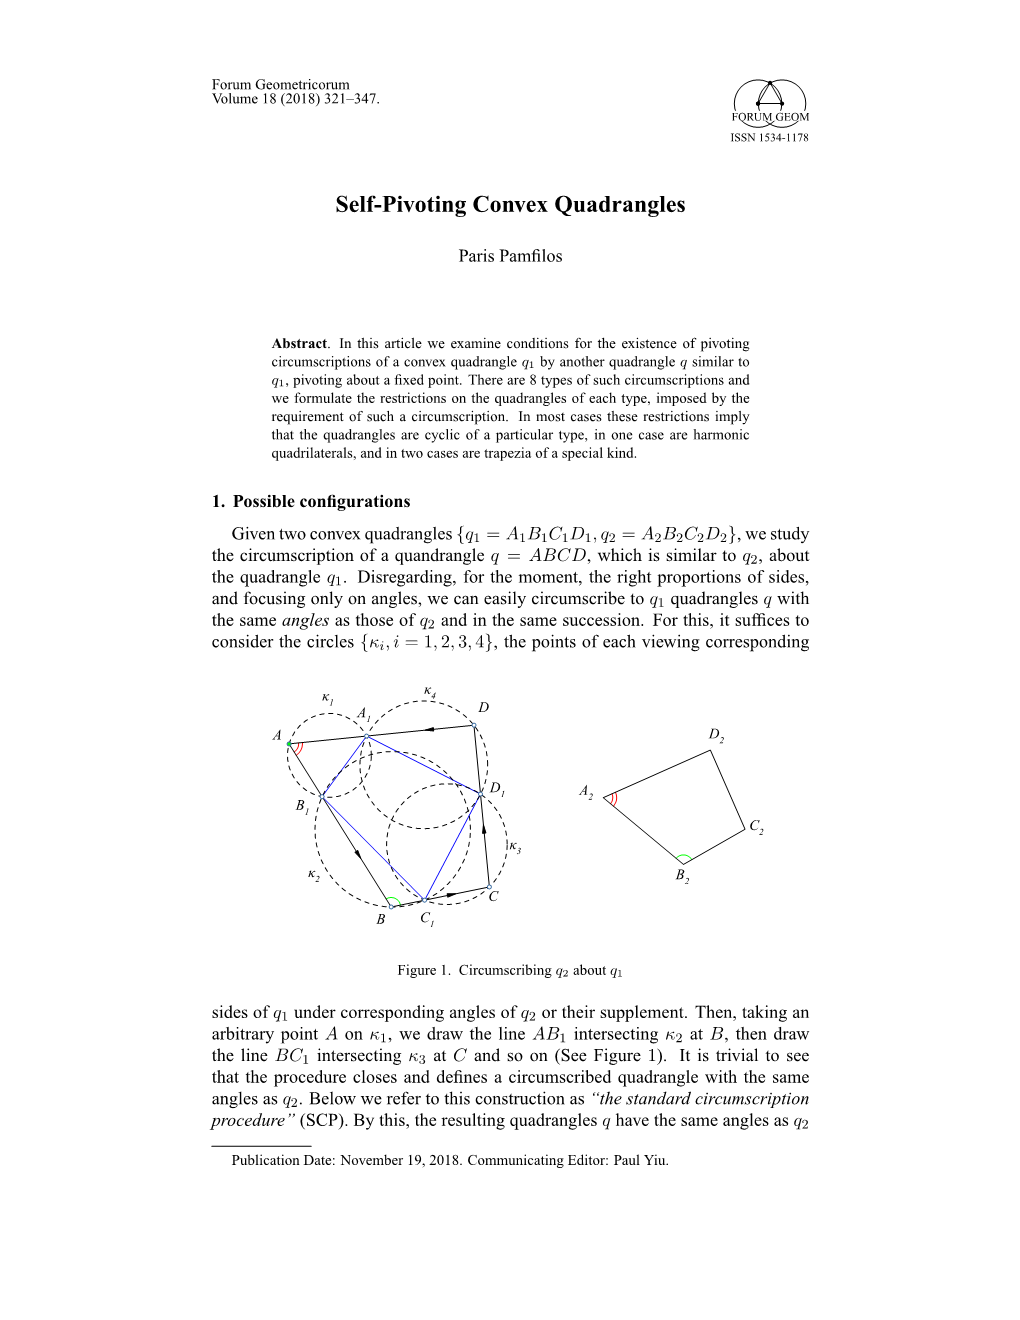 Self-Pivoting Convex Quadrangles